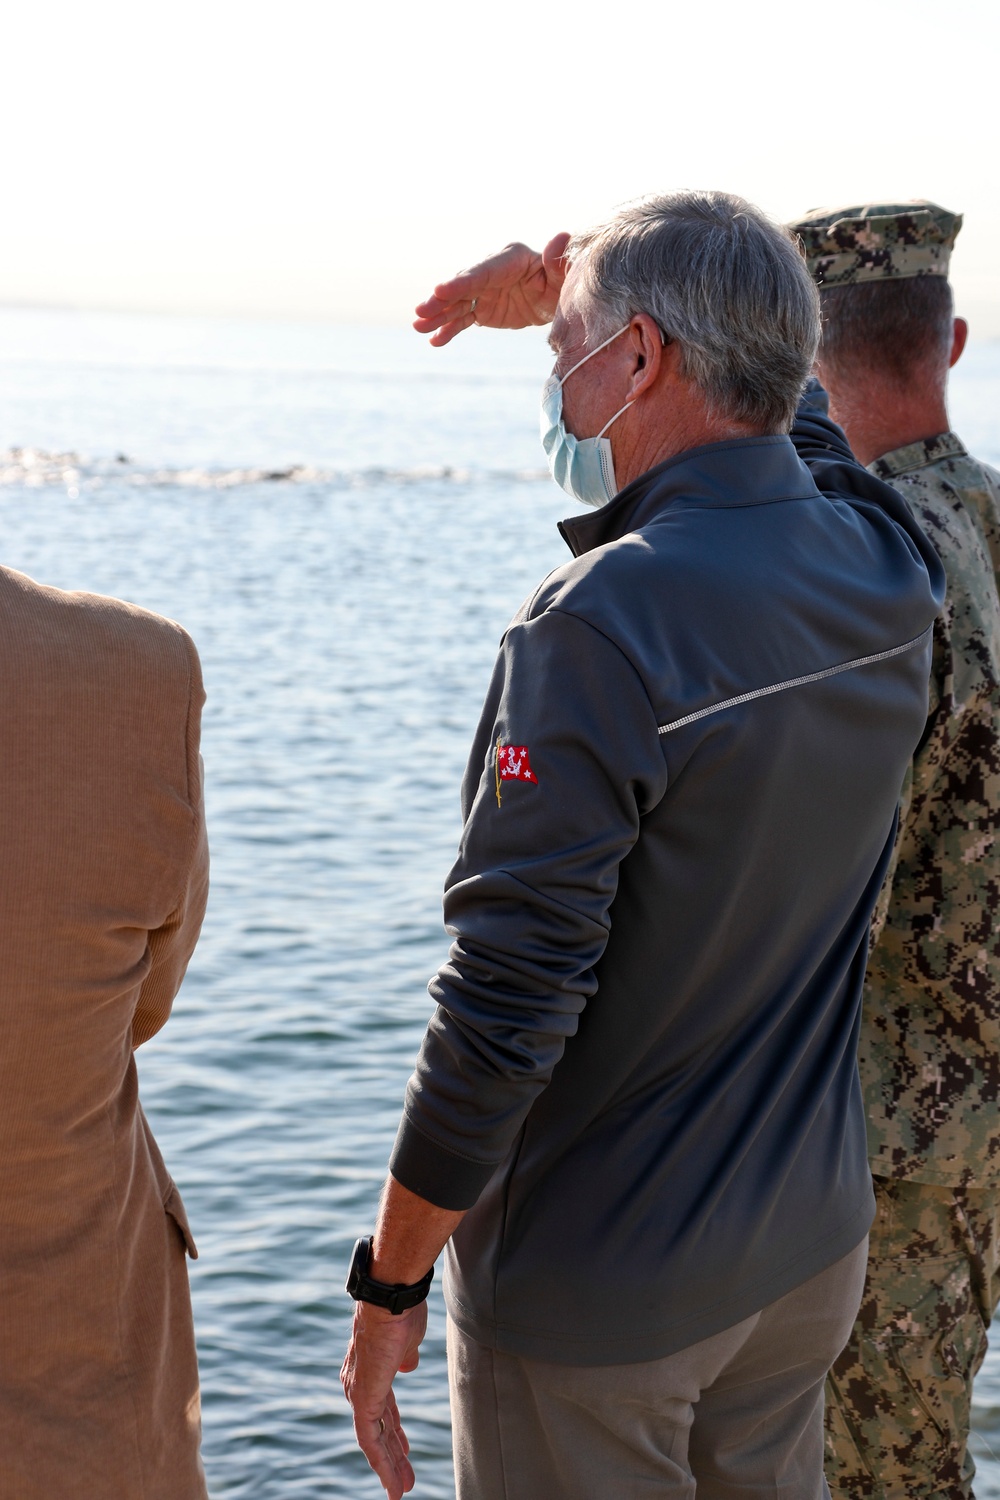 Acting Navy Under Secretary visits Naval Special Warfare